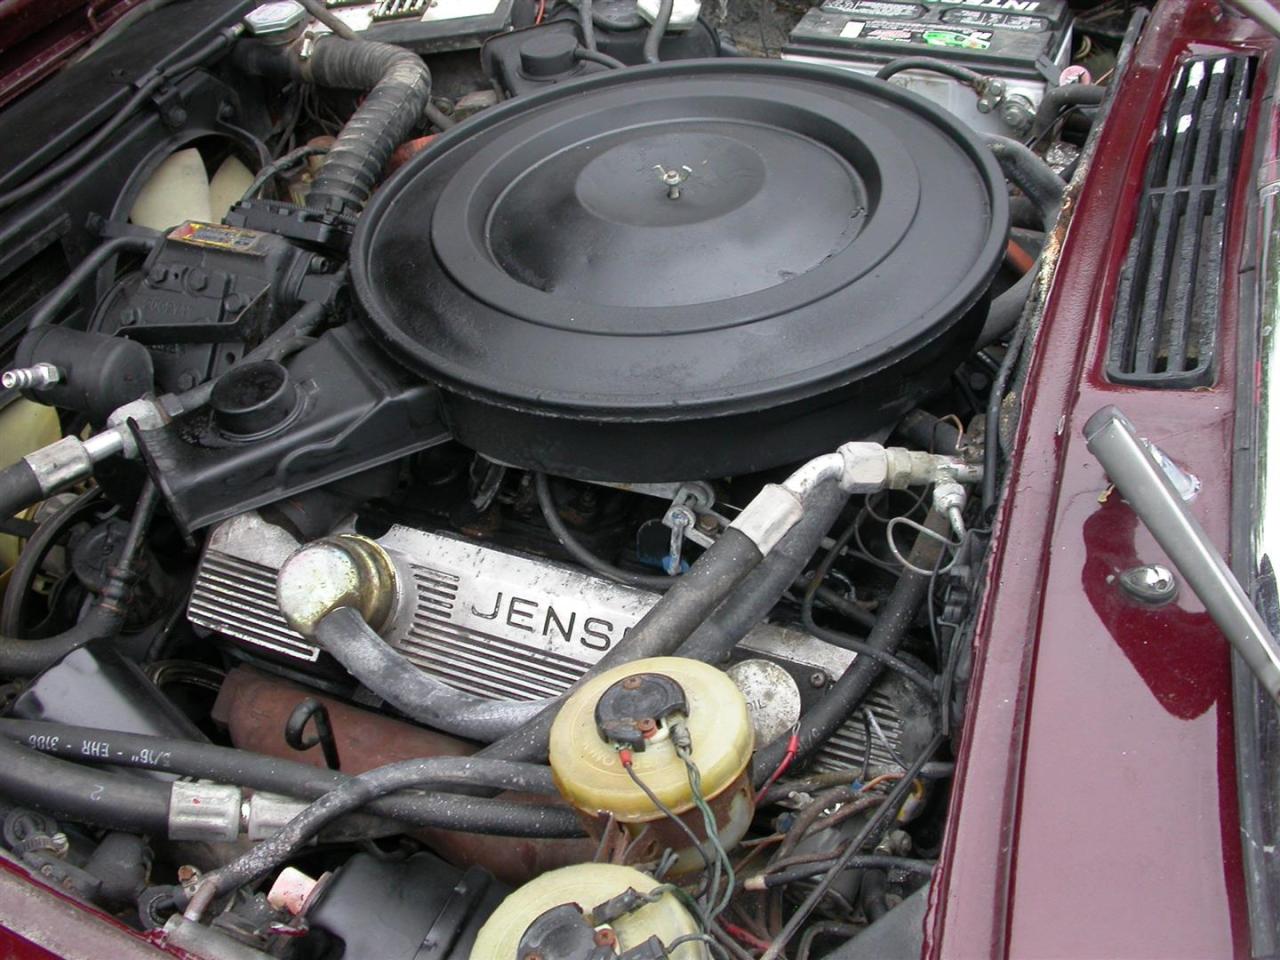 1973 Jensen Interceptor